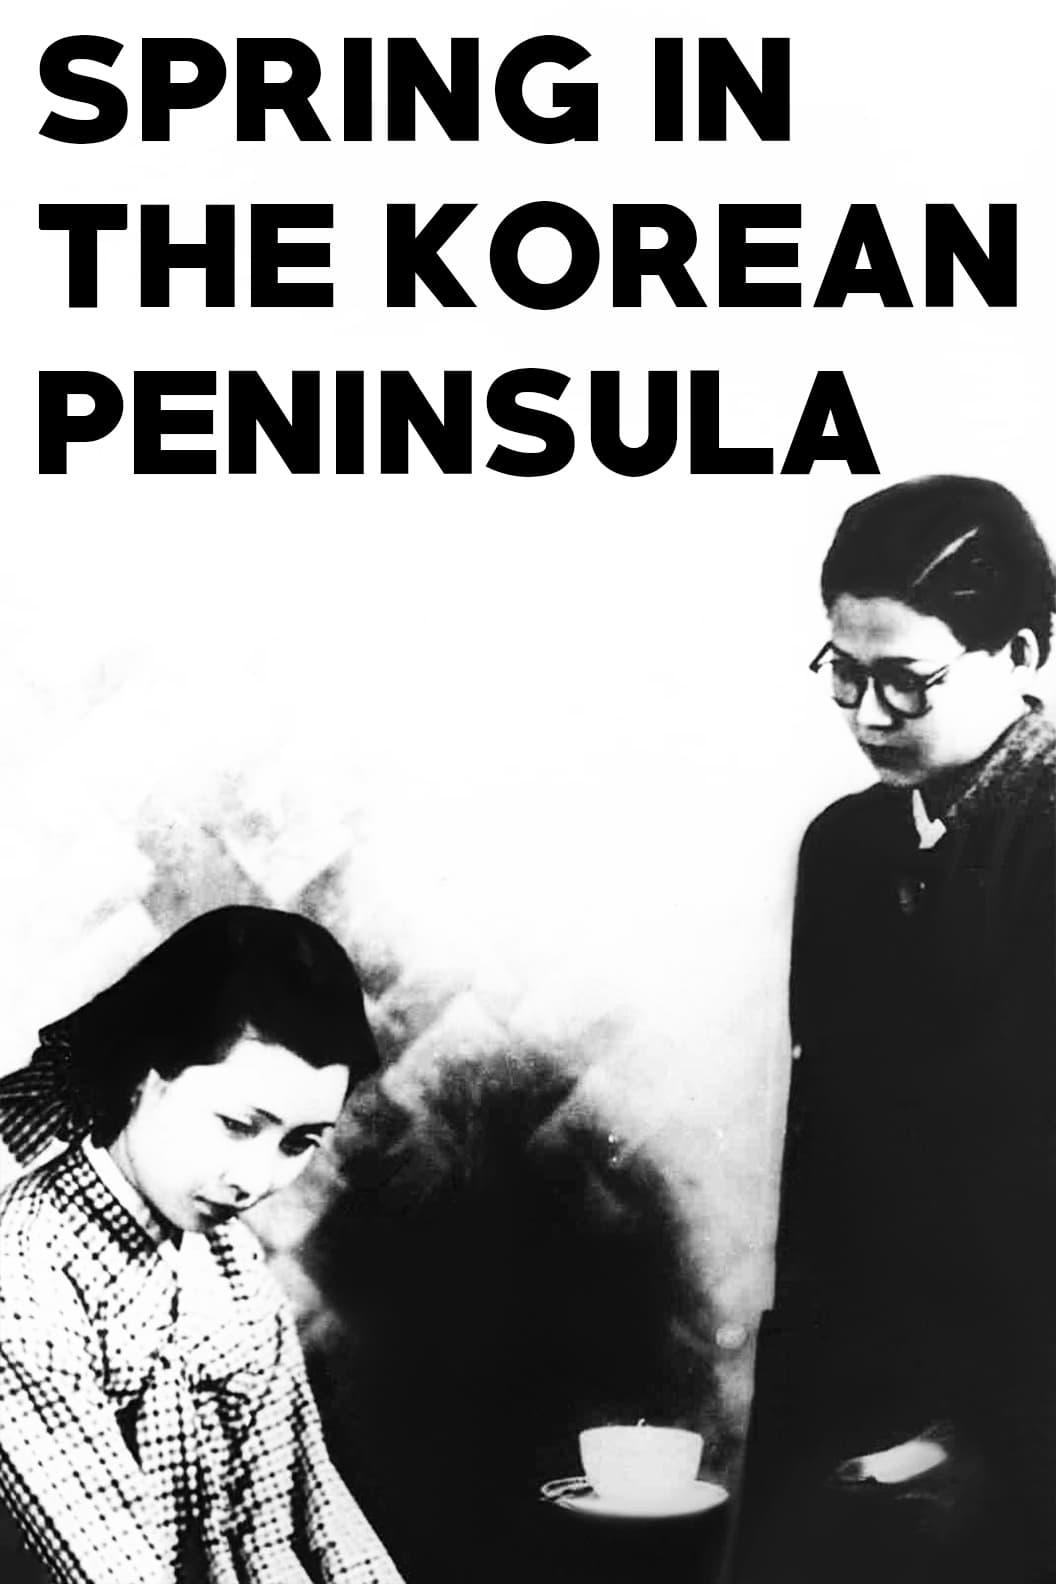 Spring in the Korean Peninsula poster